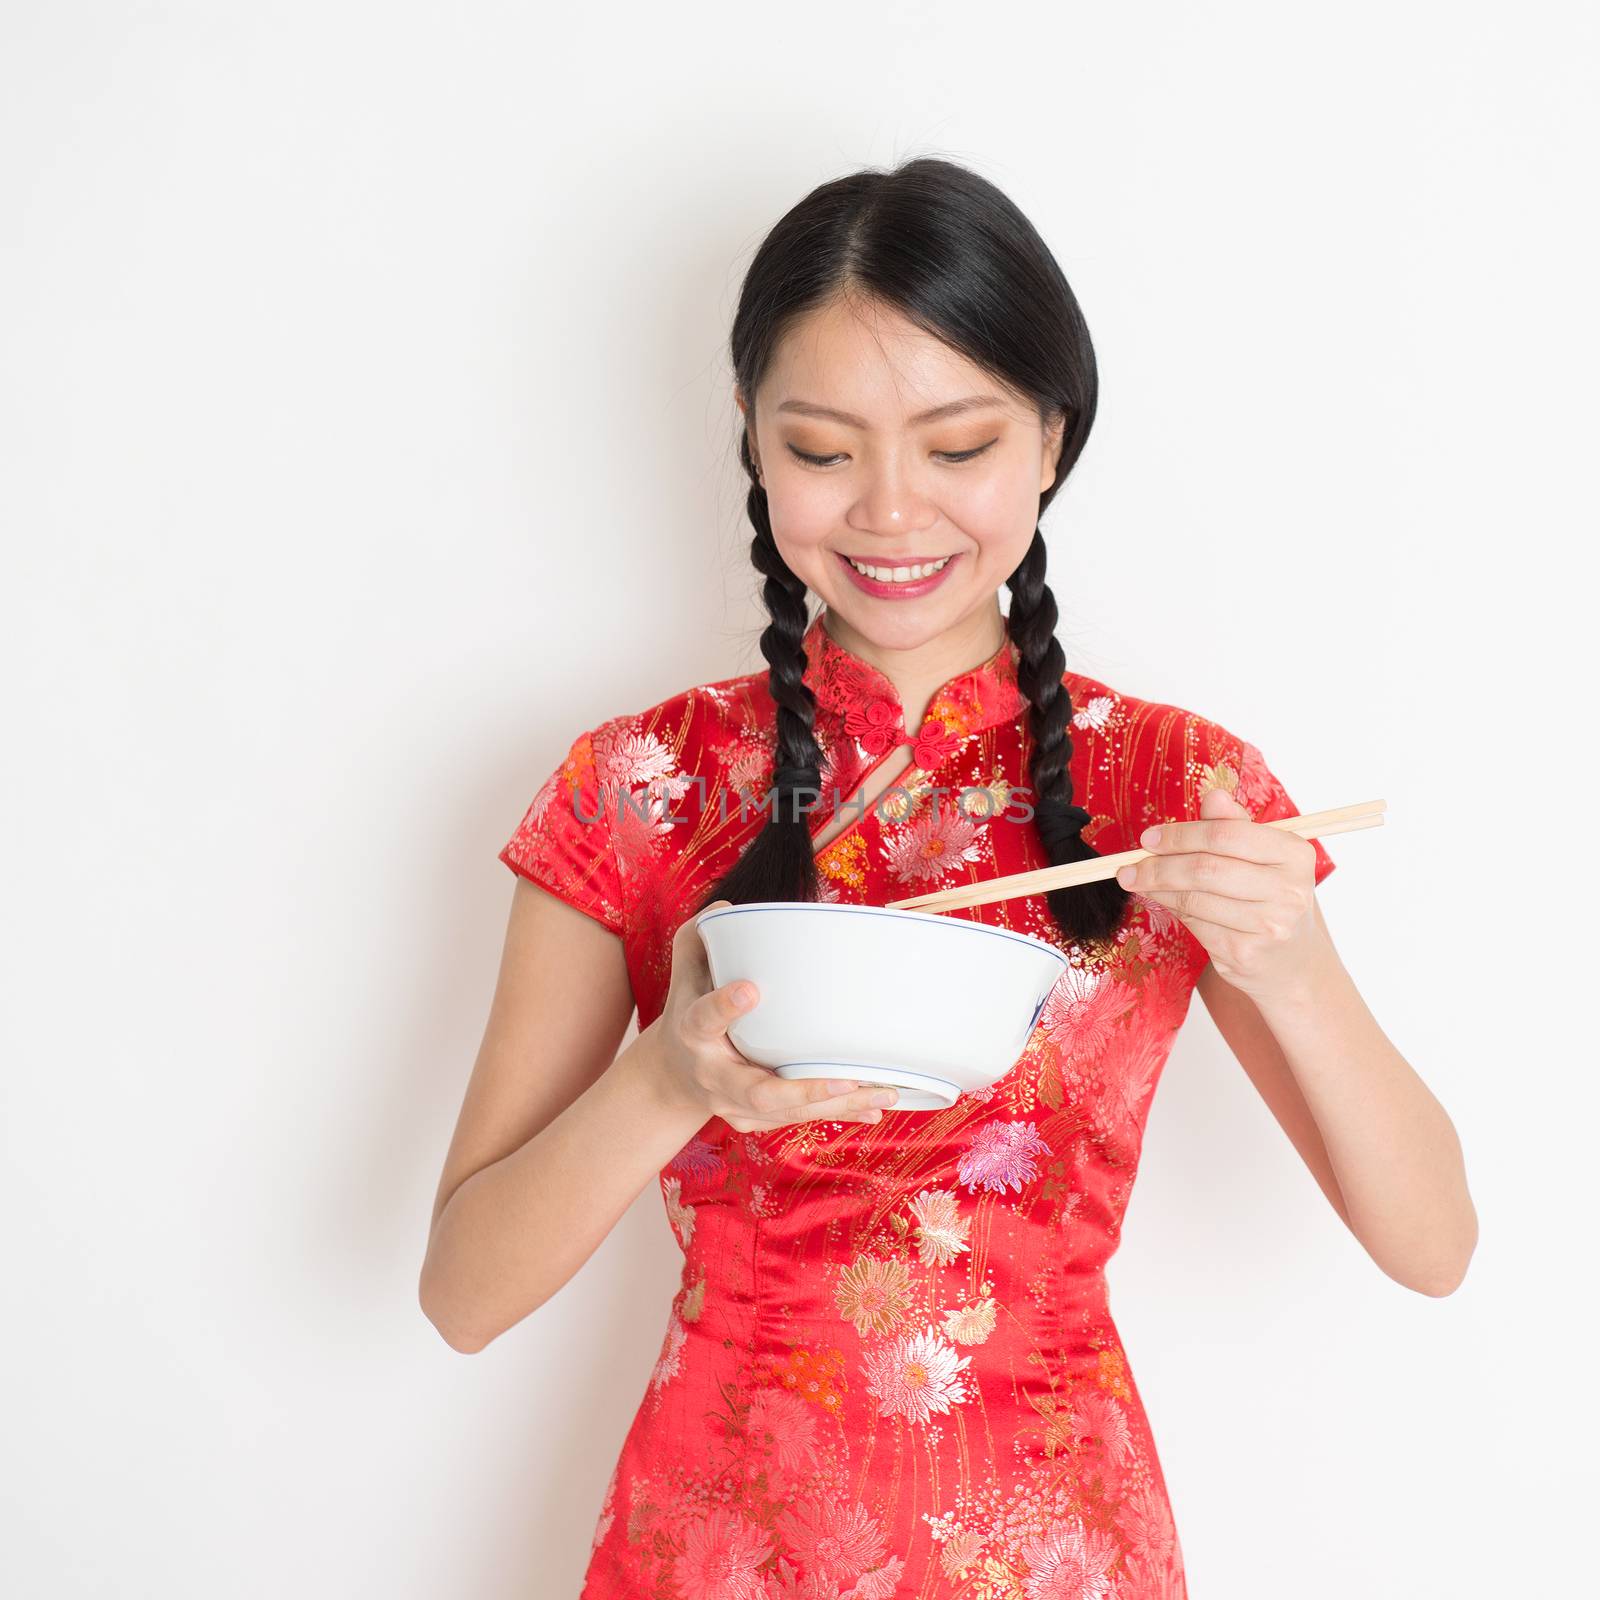 Asian chinese girl eating something by szefei